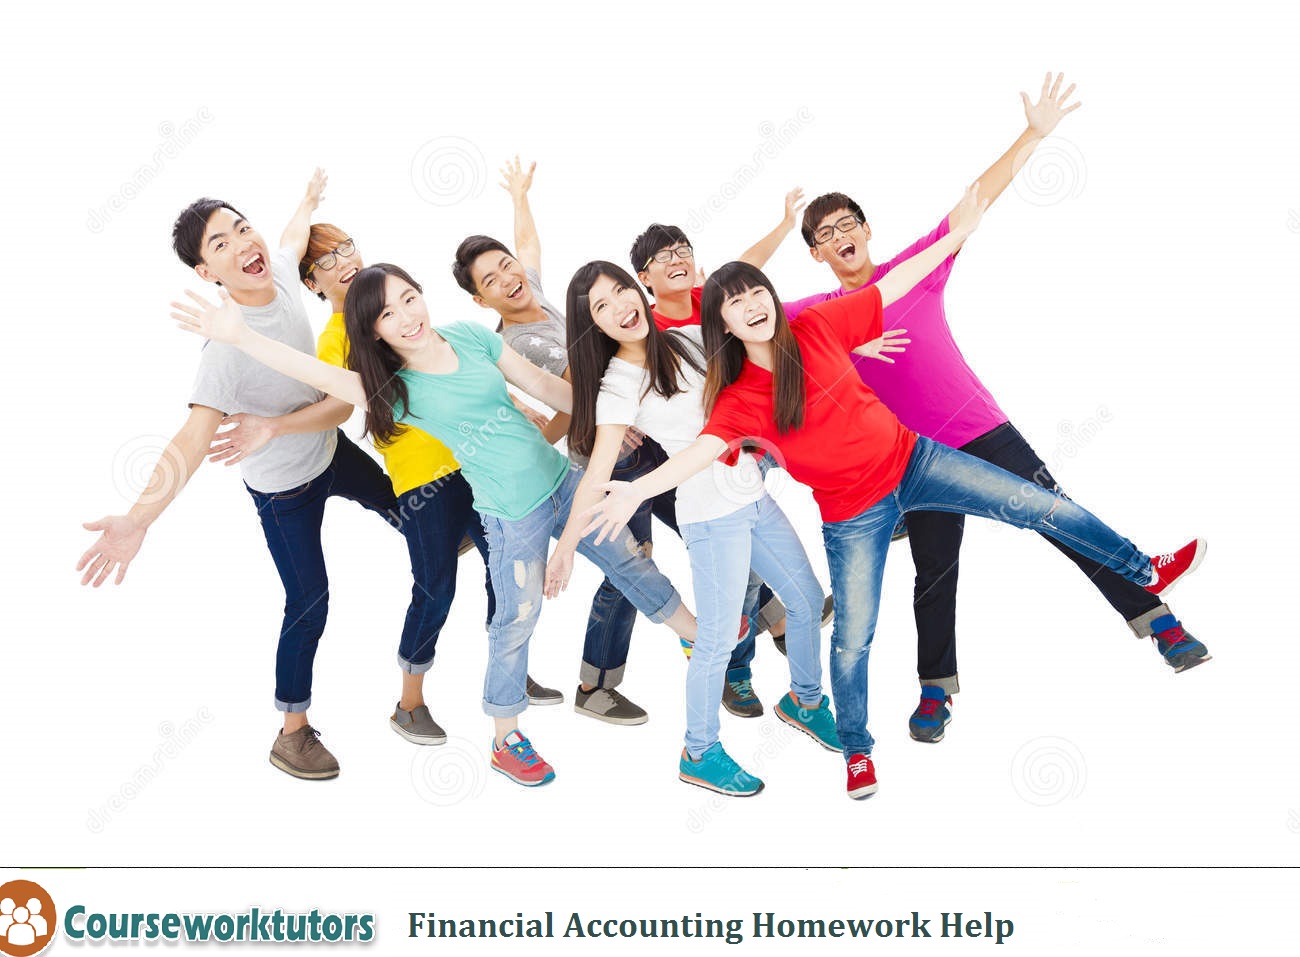 Accunting homework help